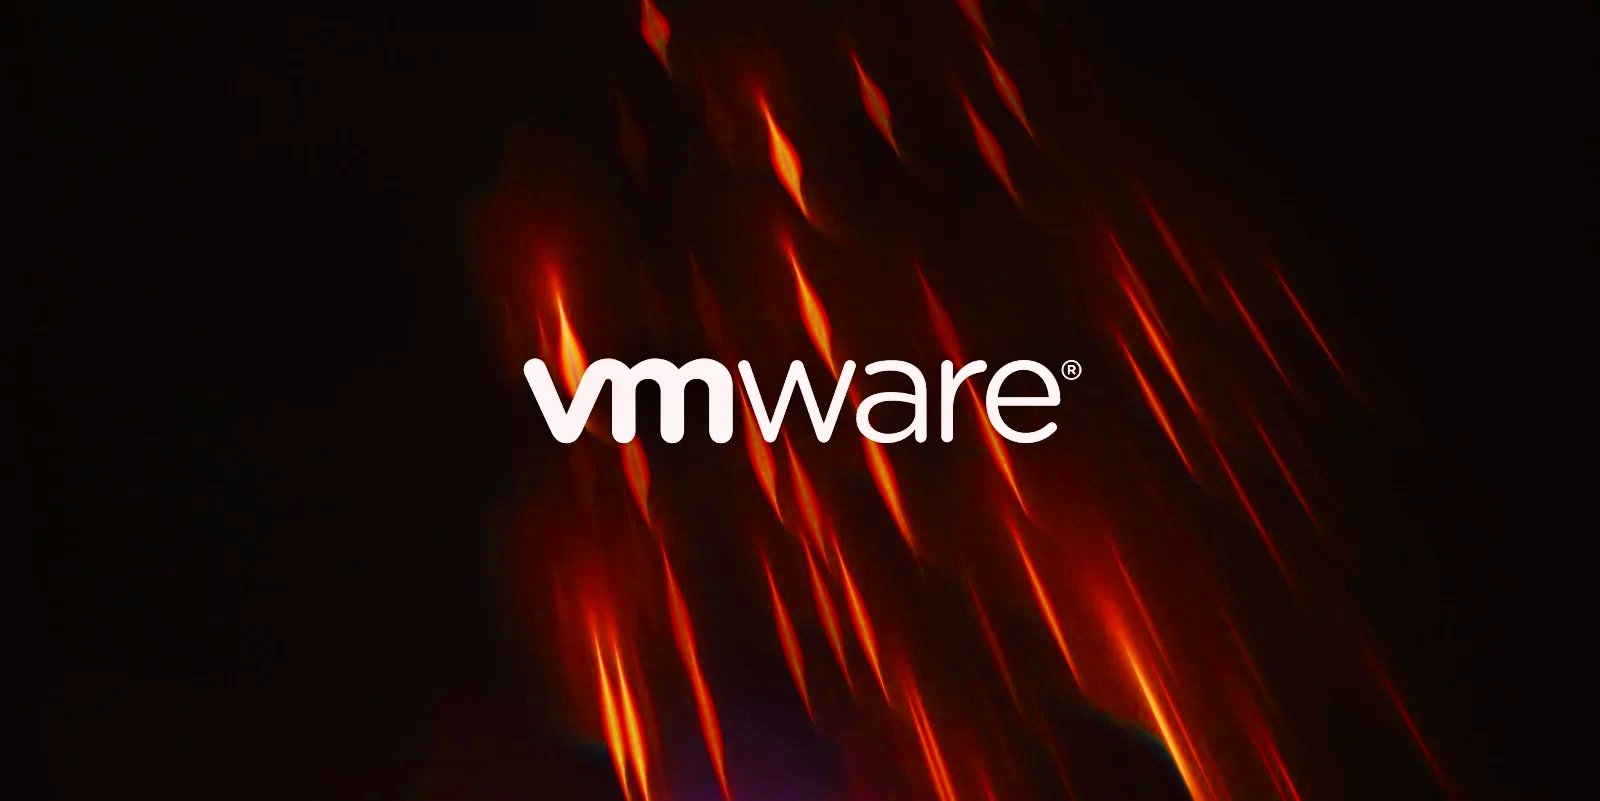 VMware headpic